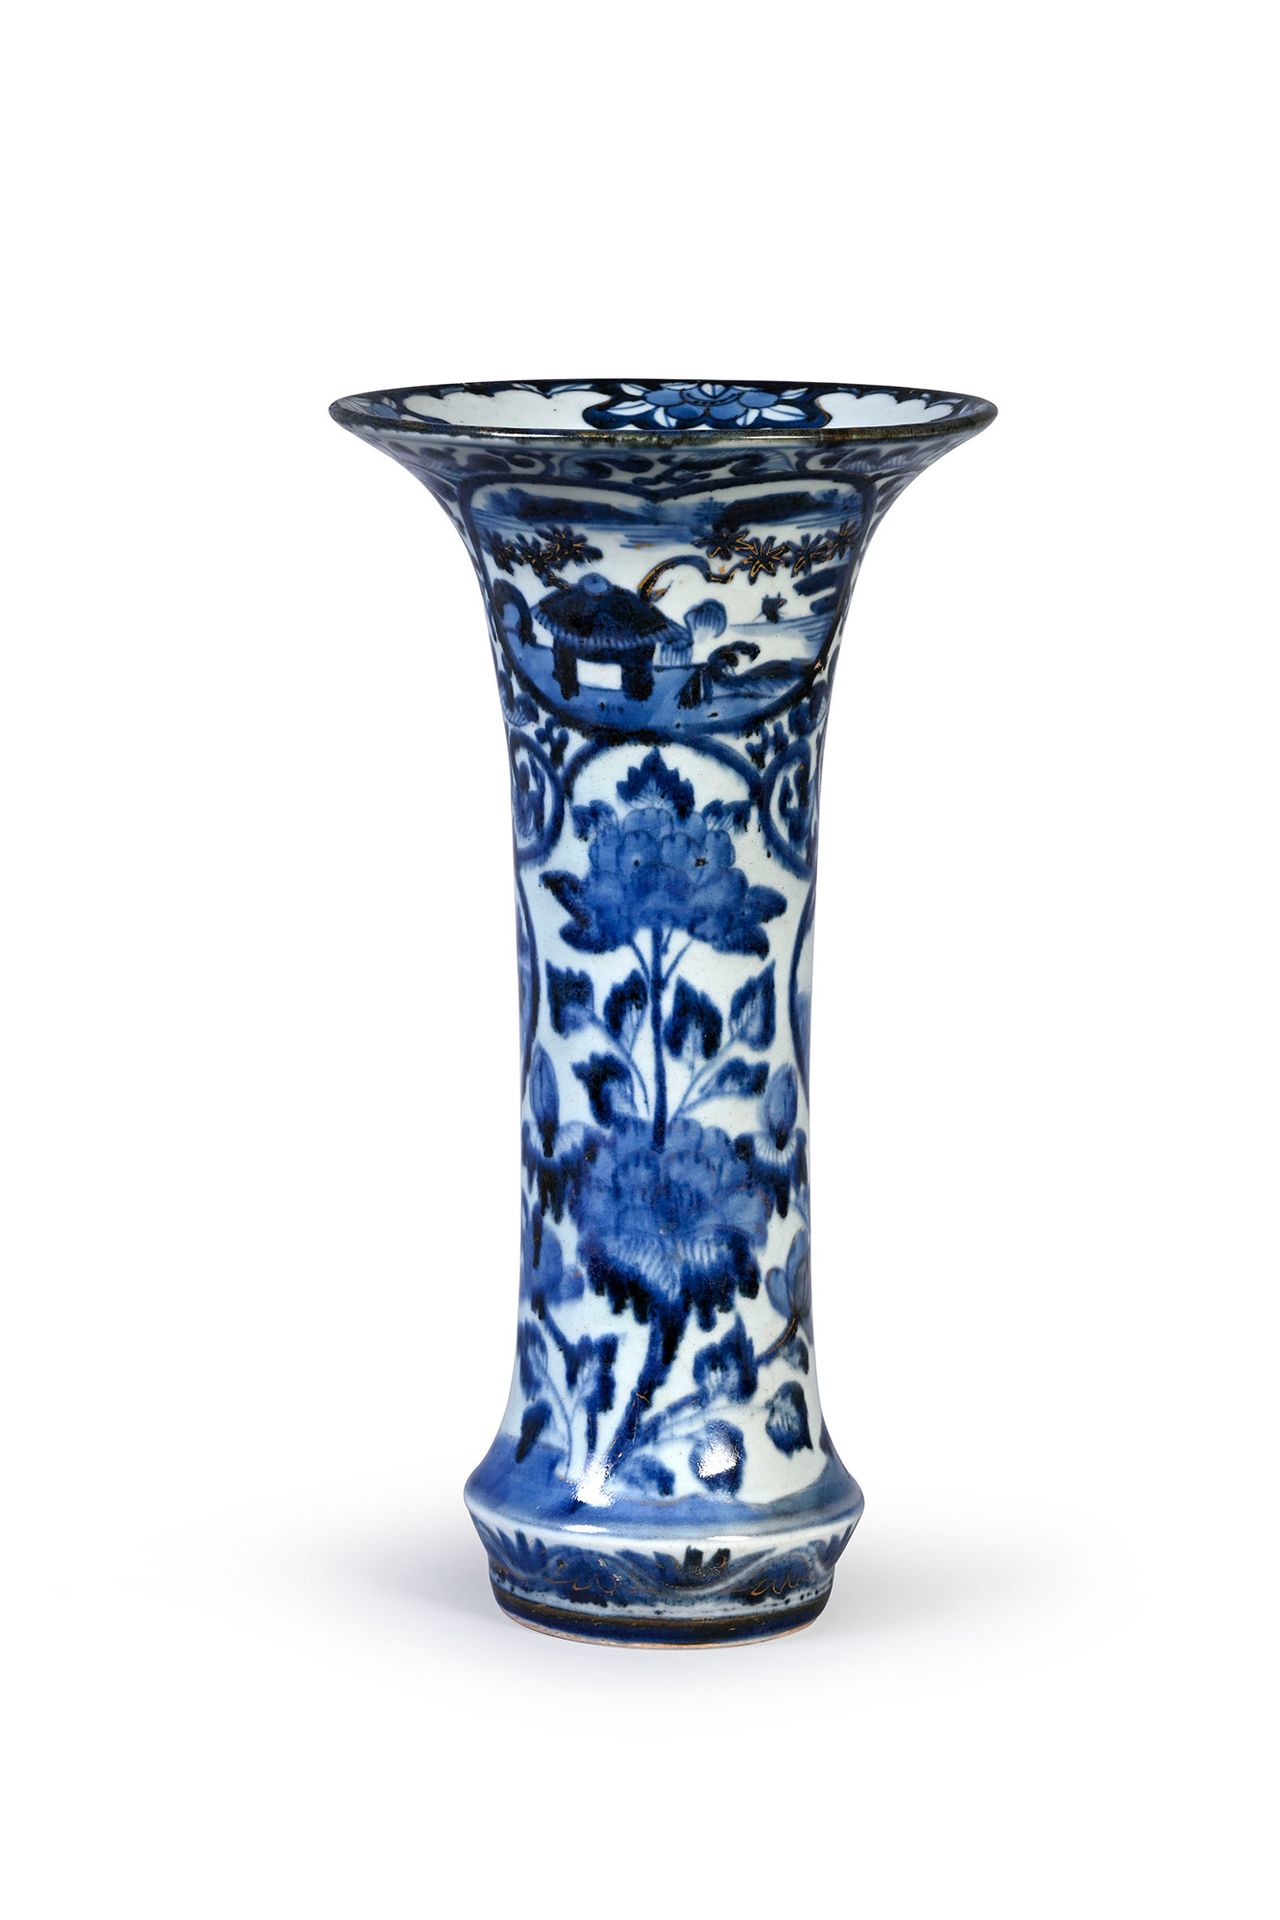 JAPON, Fours de Arita, XVIIe siècle Arita porcelain vase
With cylindrical body a&hellip;